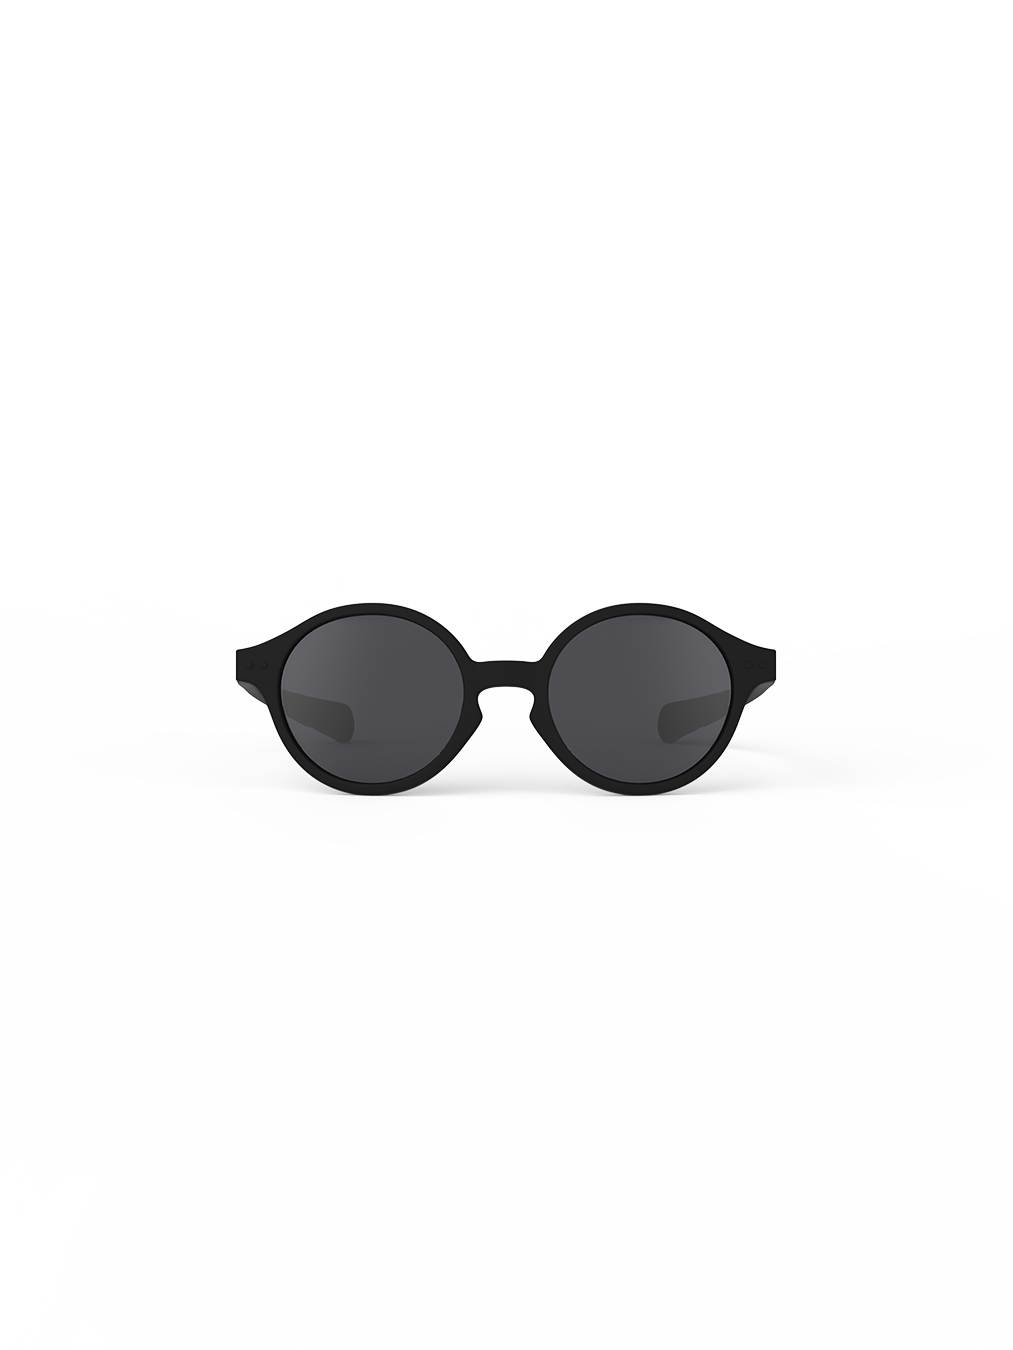 Black Toddler Sunglasses